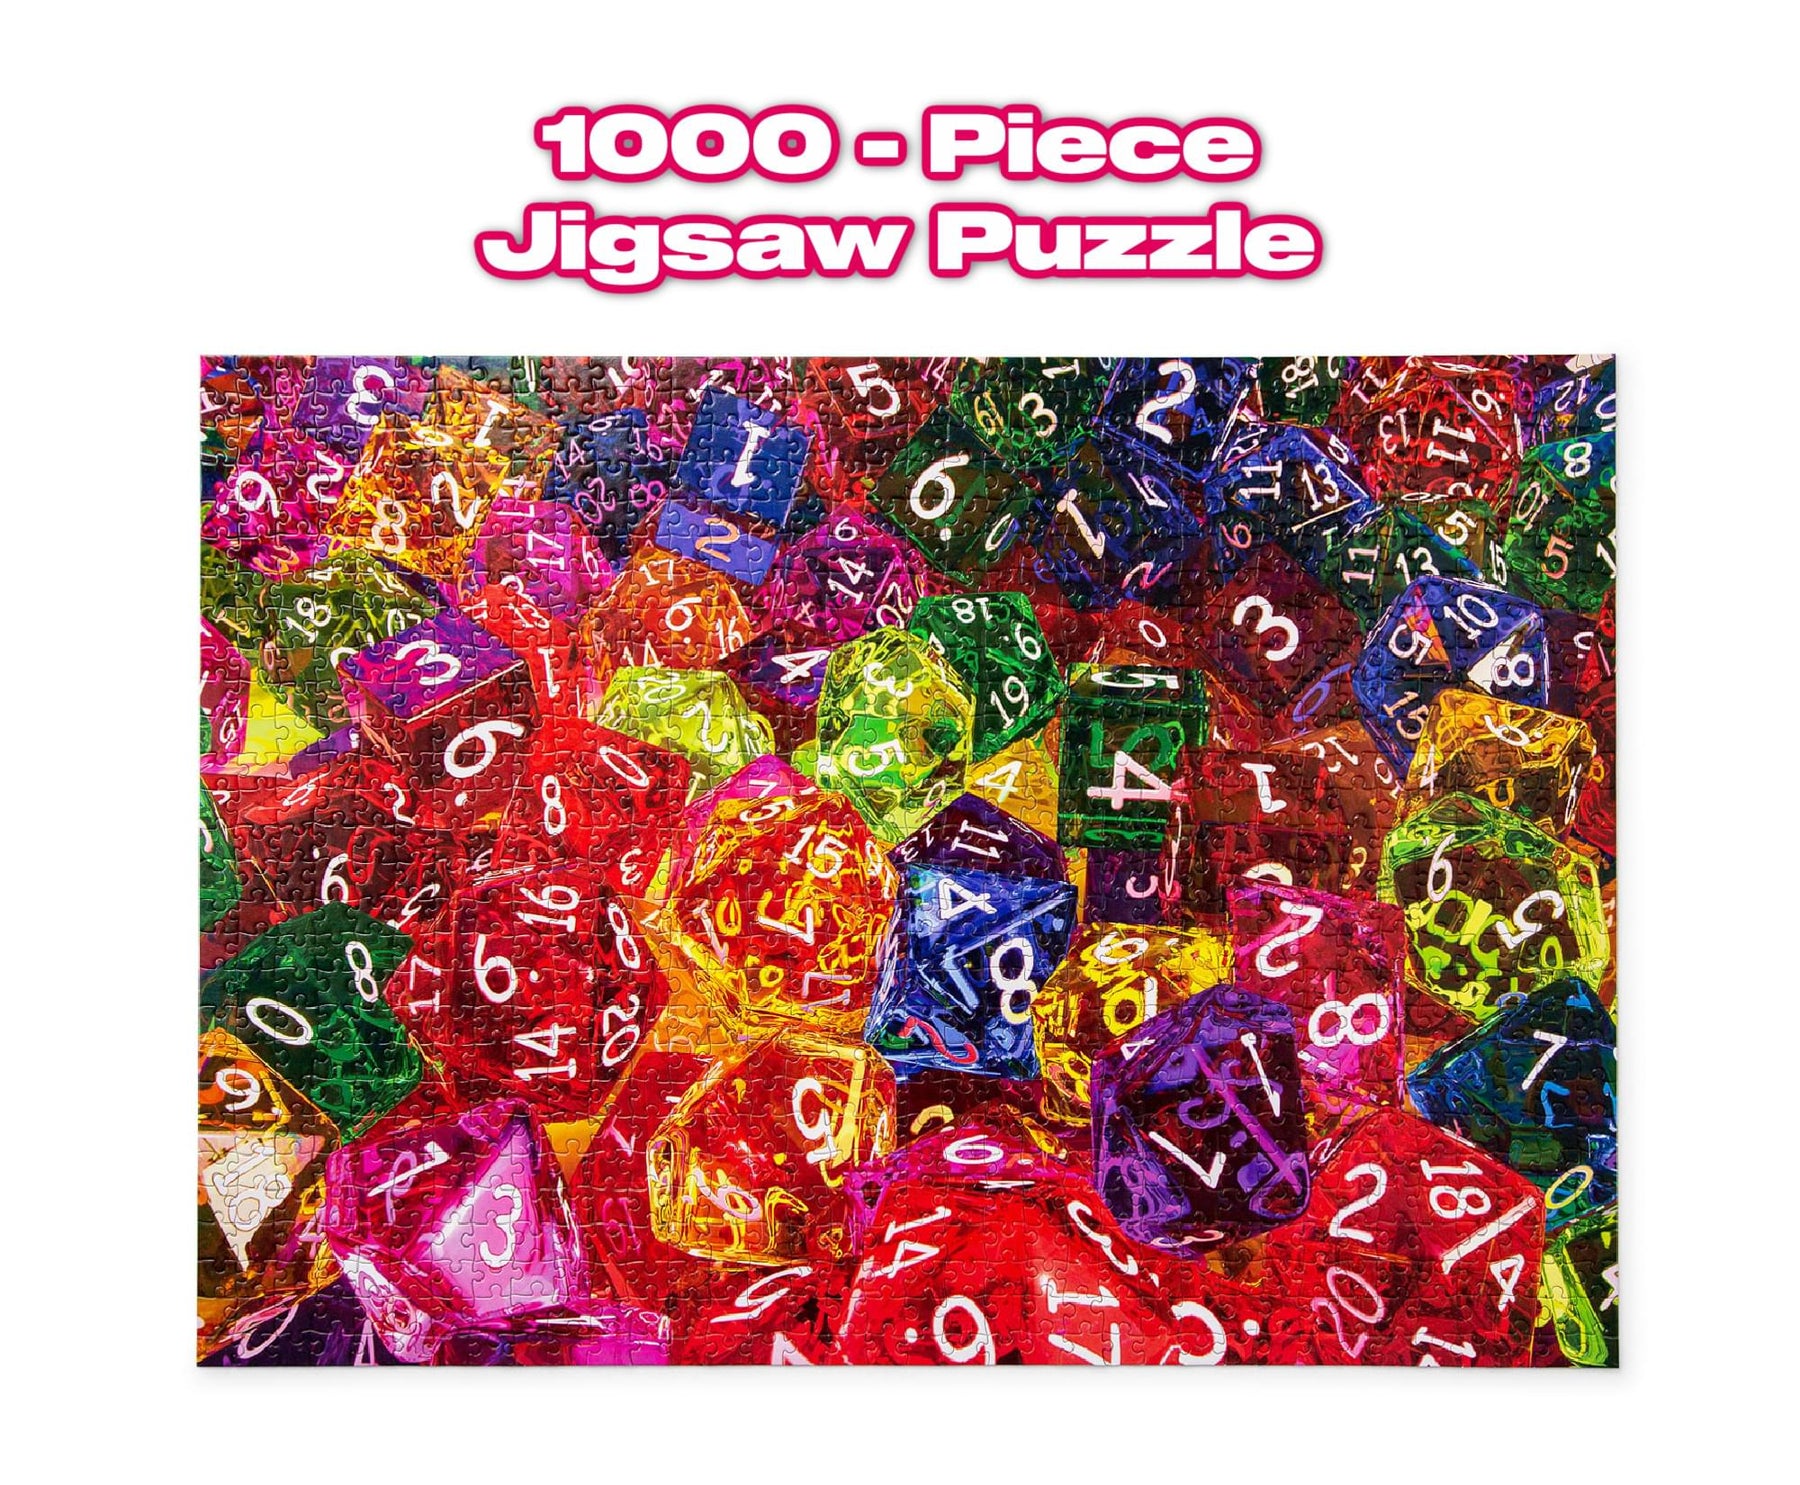 Dice, Dice, Baby! 1000 Piece Jigsaw Puzzle